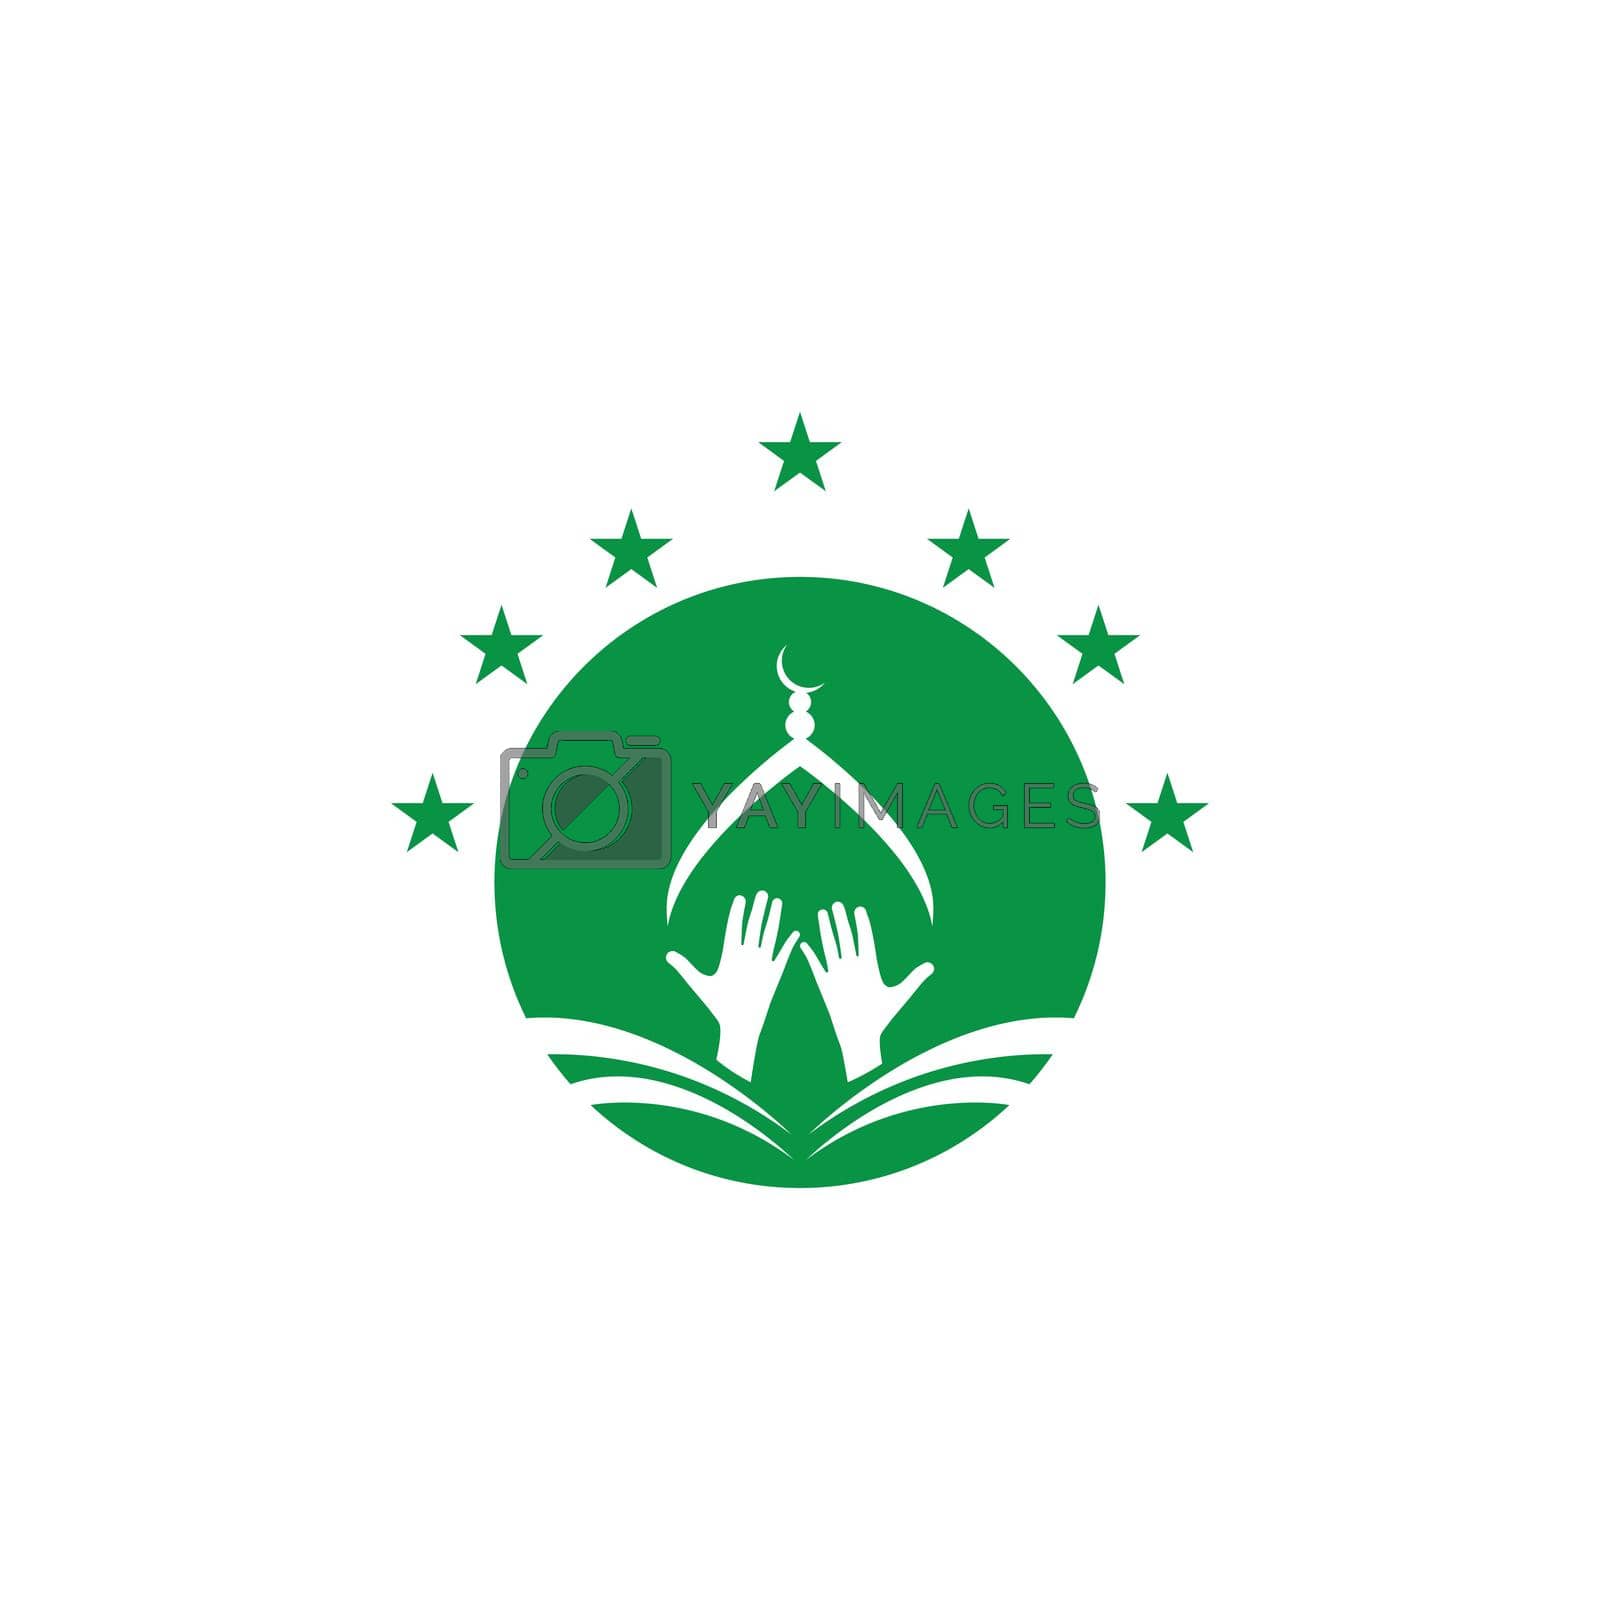 Royalty free image of Islamic logo by awk